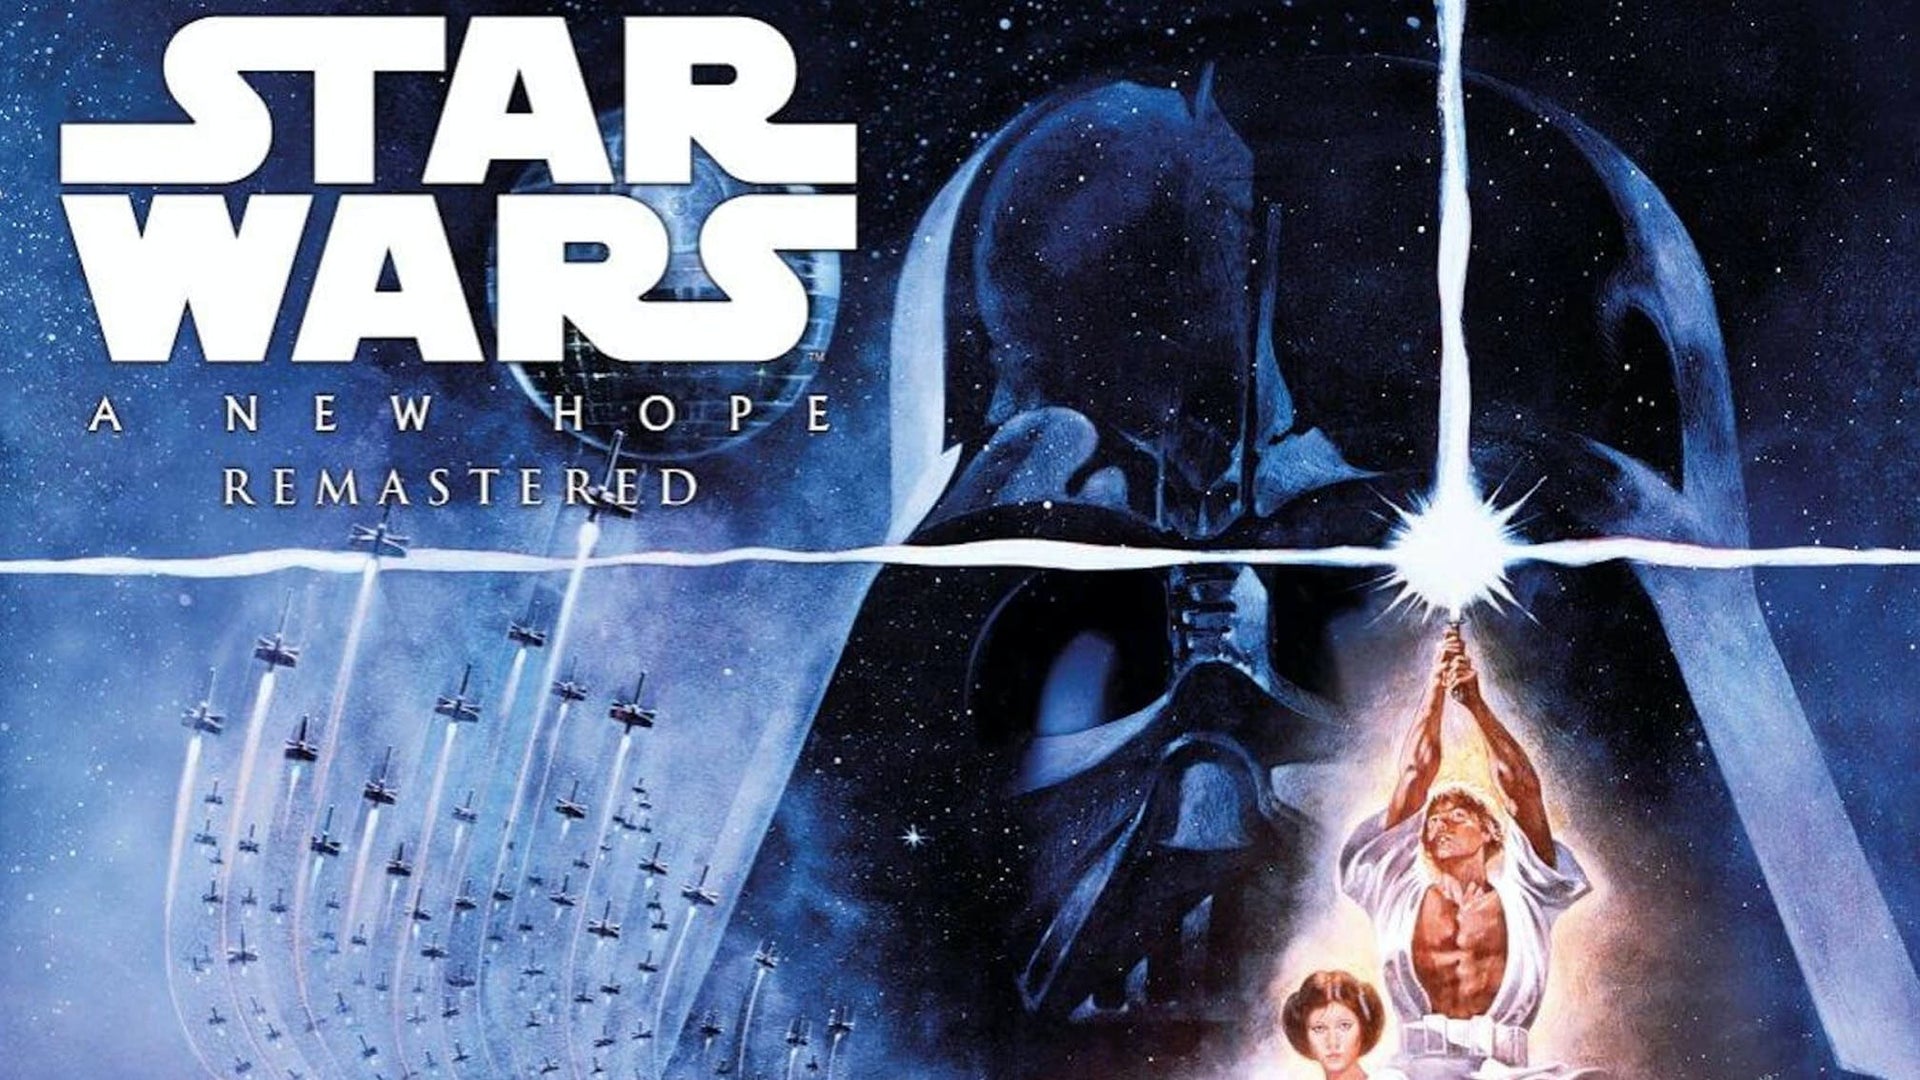 Star Wars ‘A New Hope’ Original Motion Picture Soundtrack (2LP Vinyl)